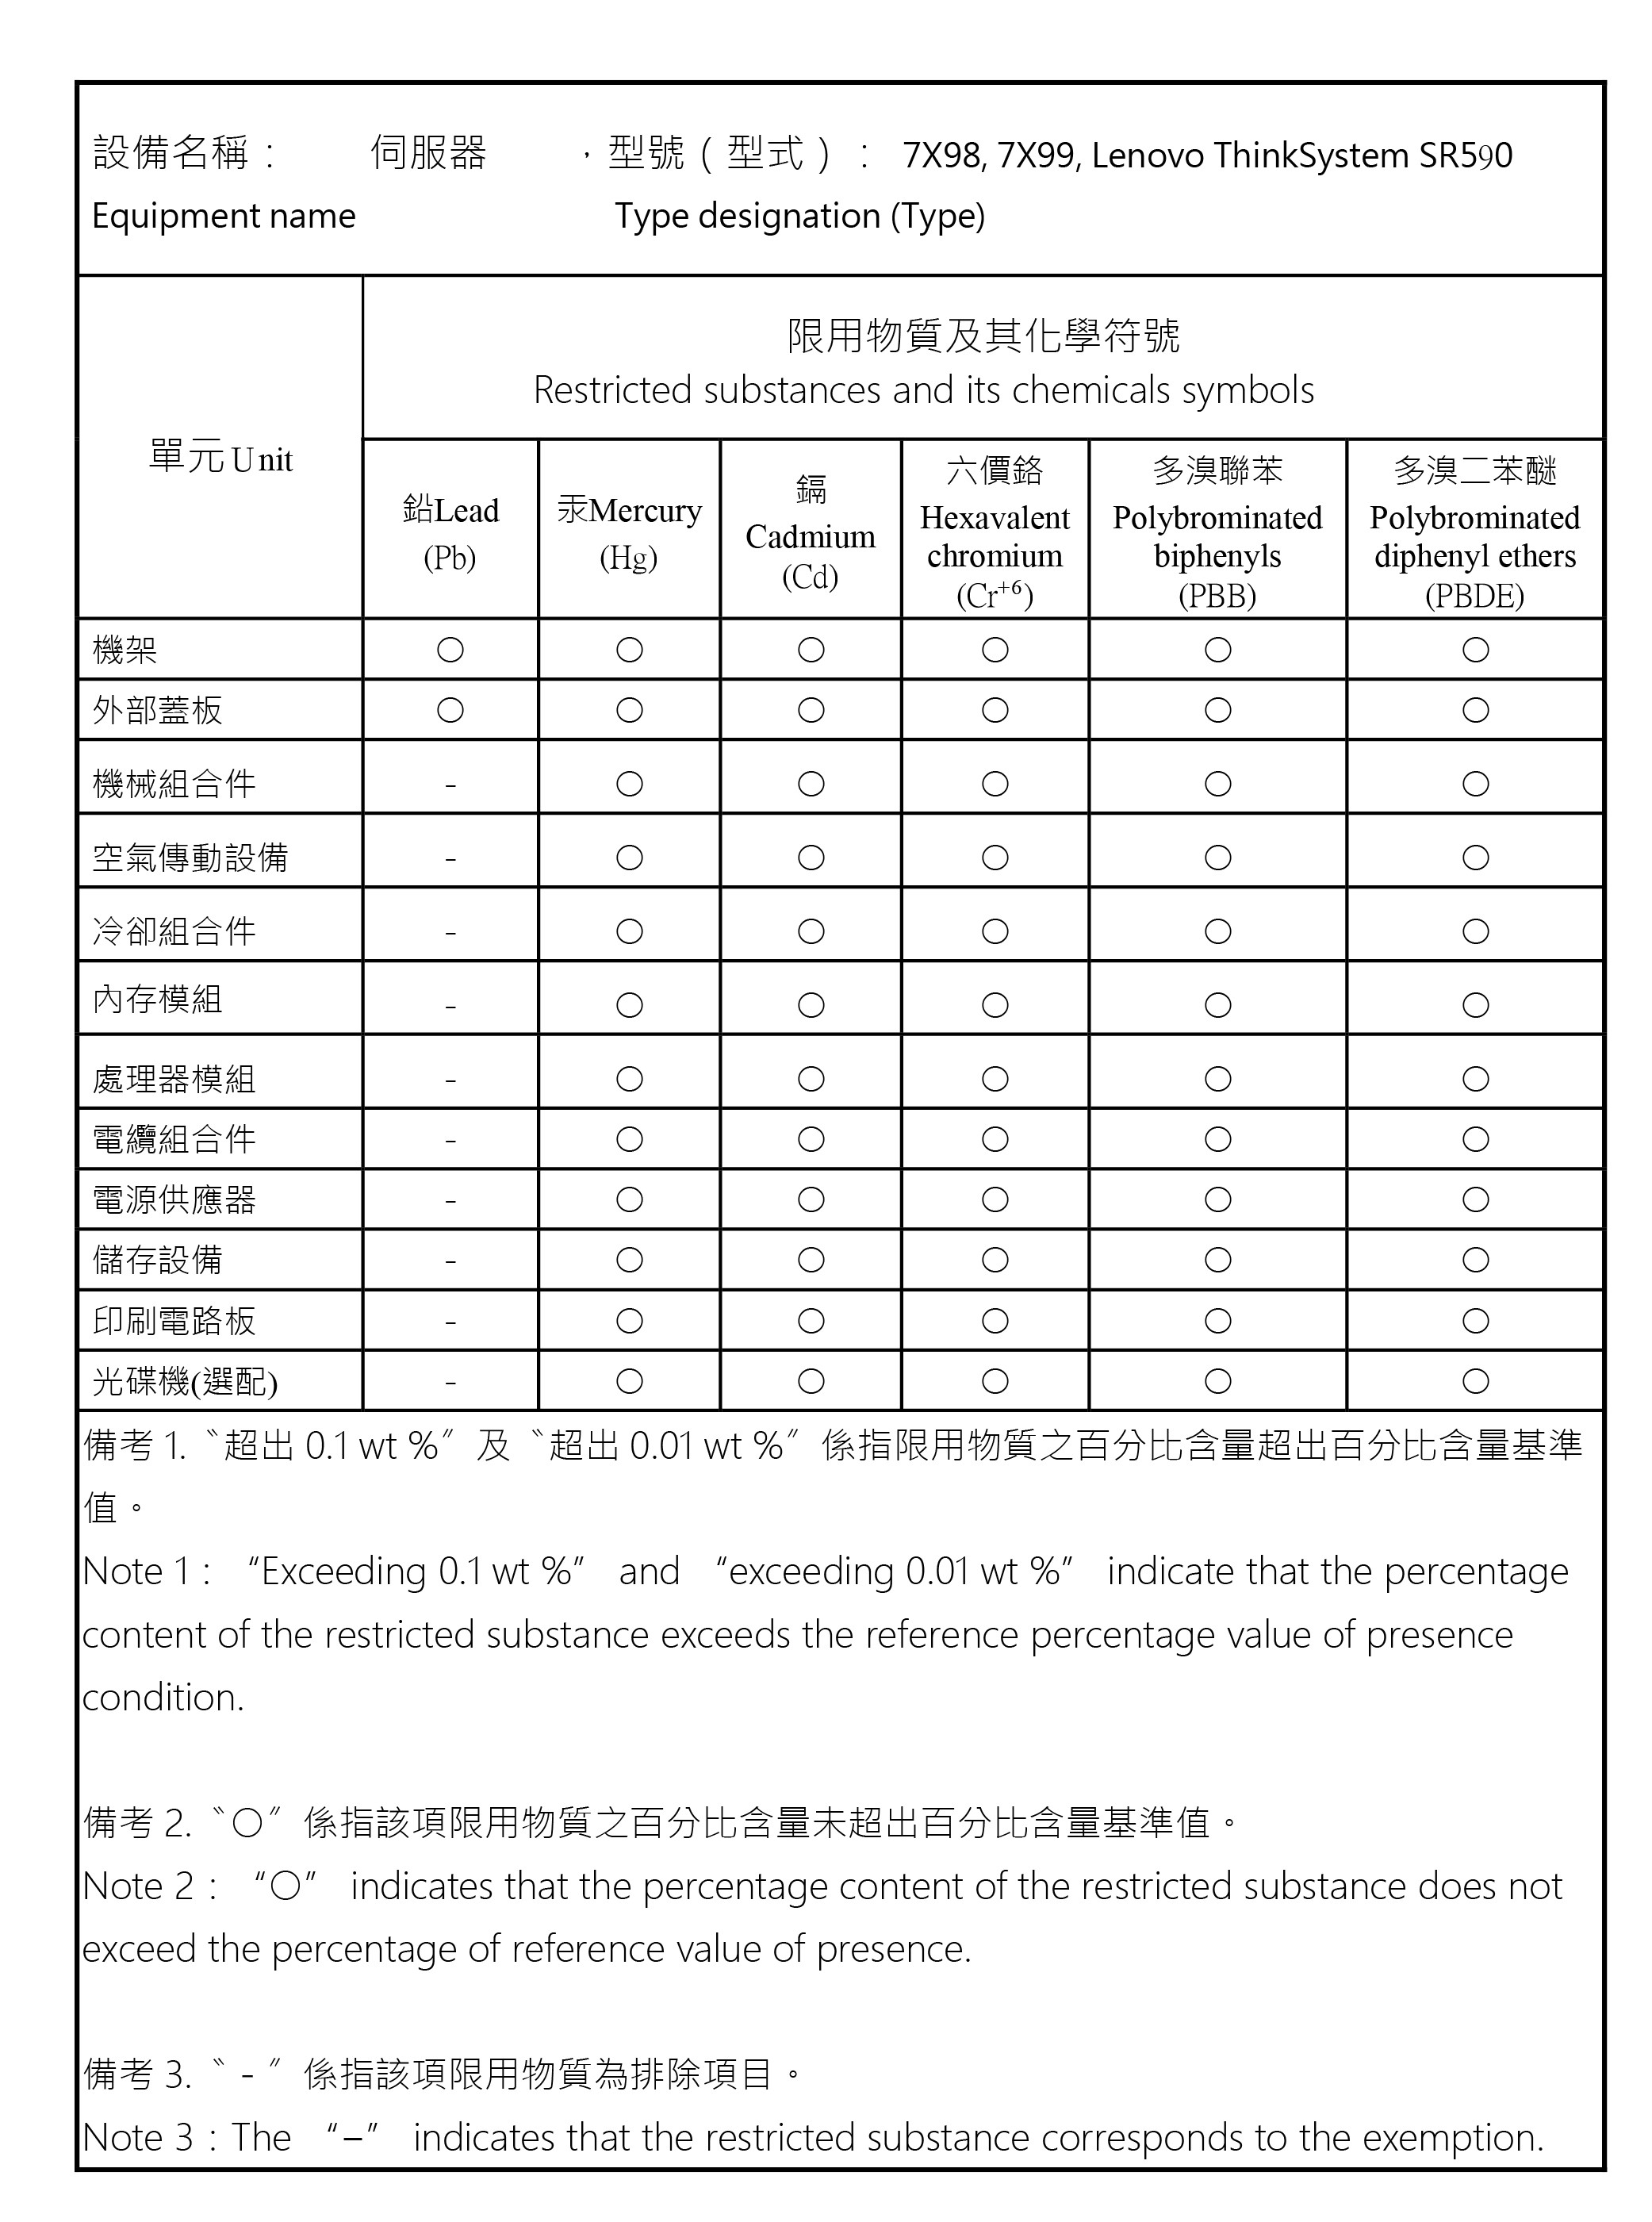 Taiwan Class A compliance statement